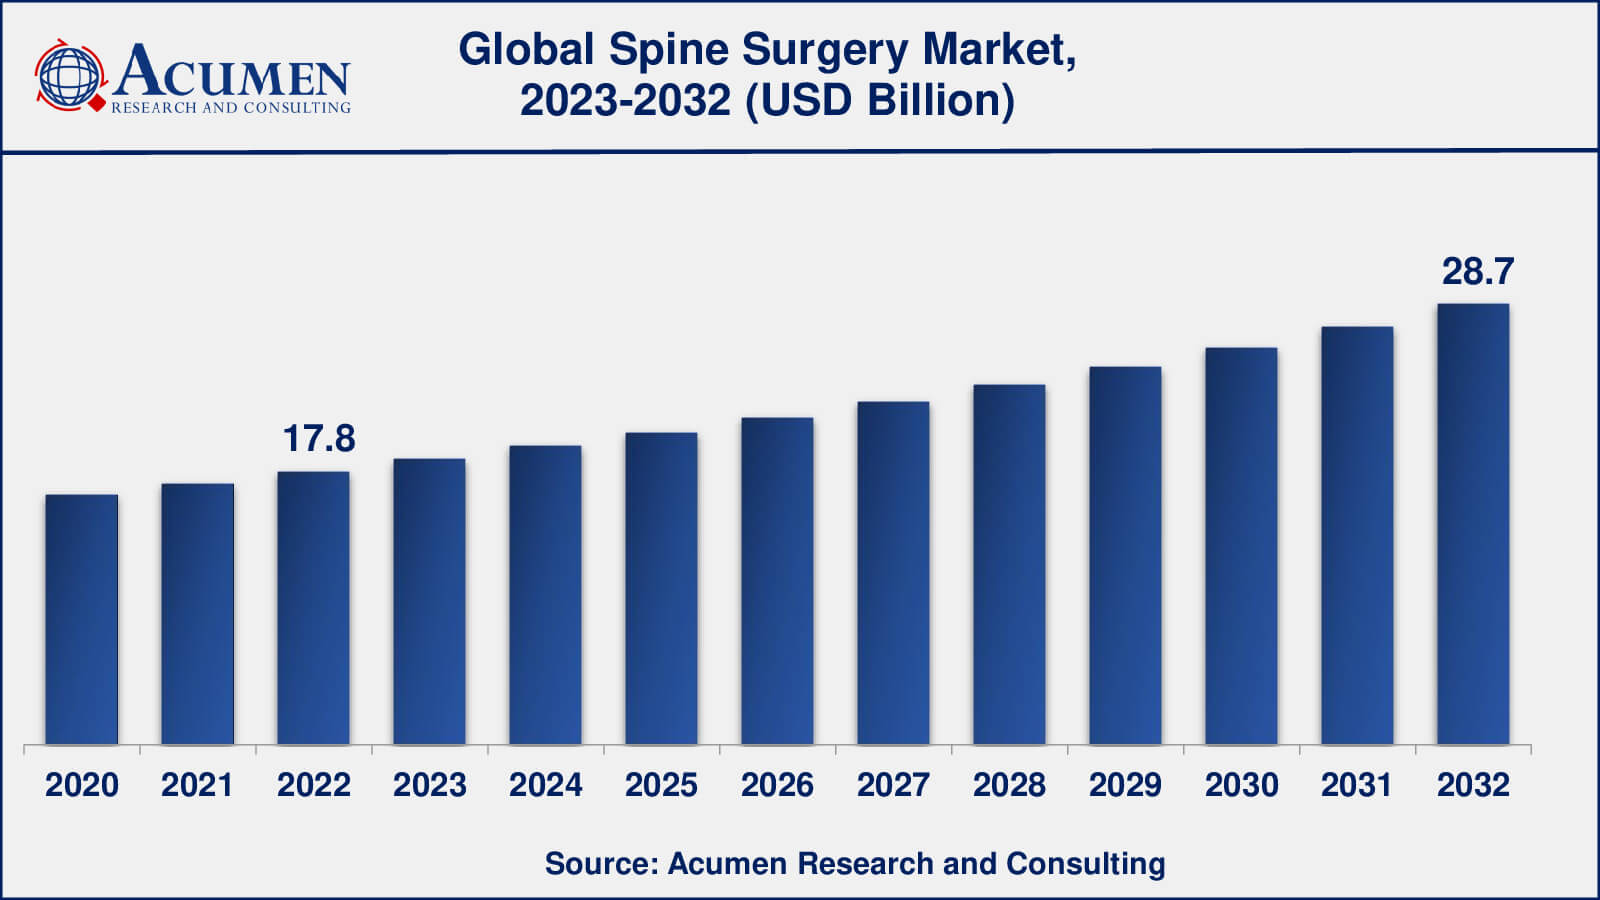 Spine Surgery Market Analysis Period